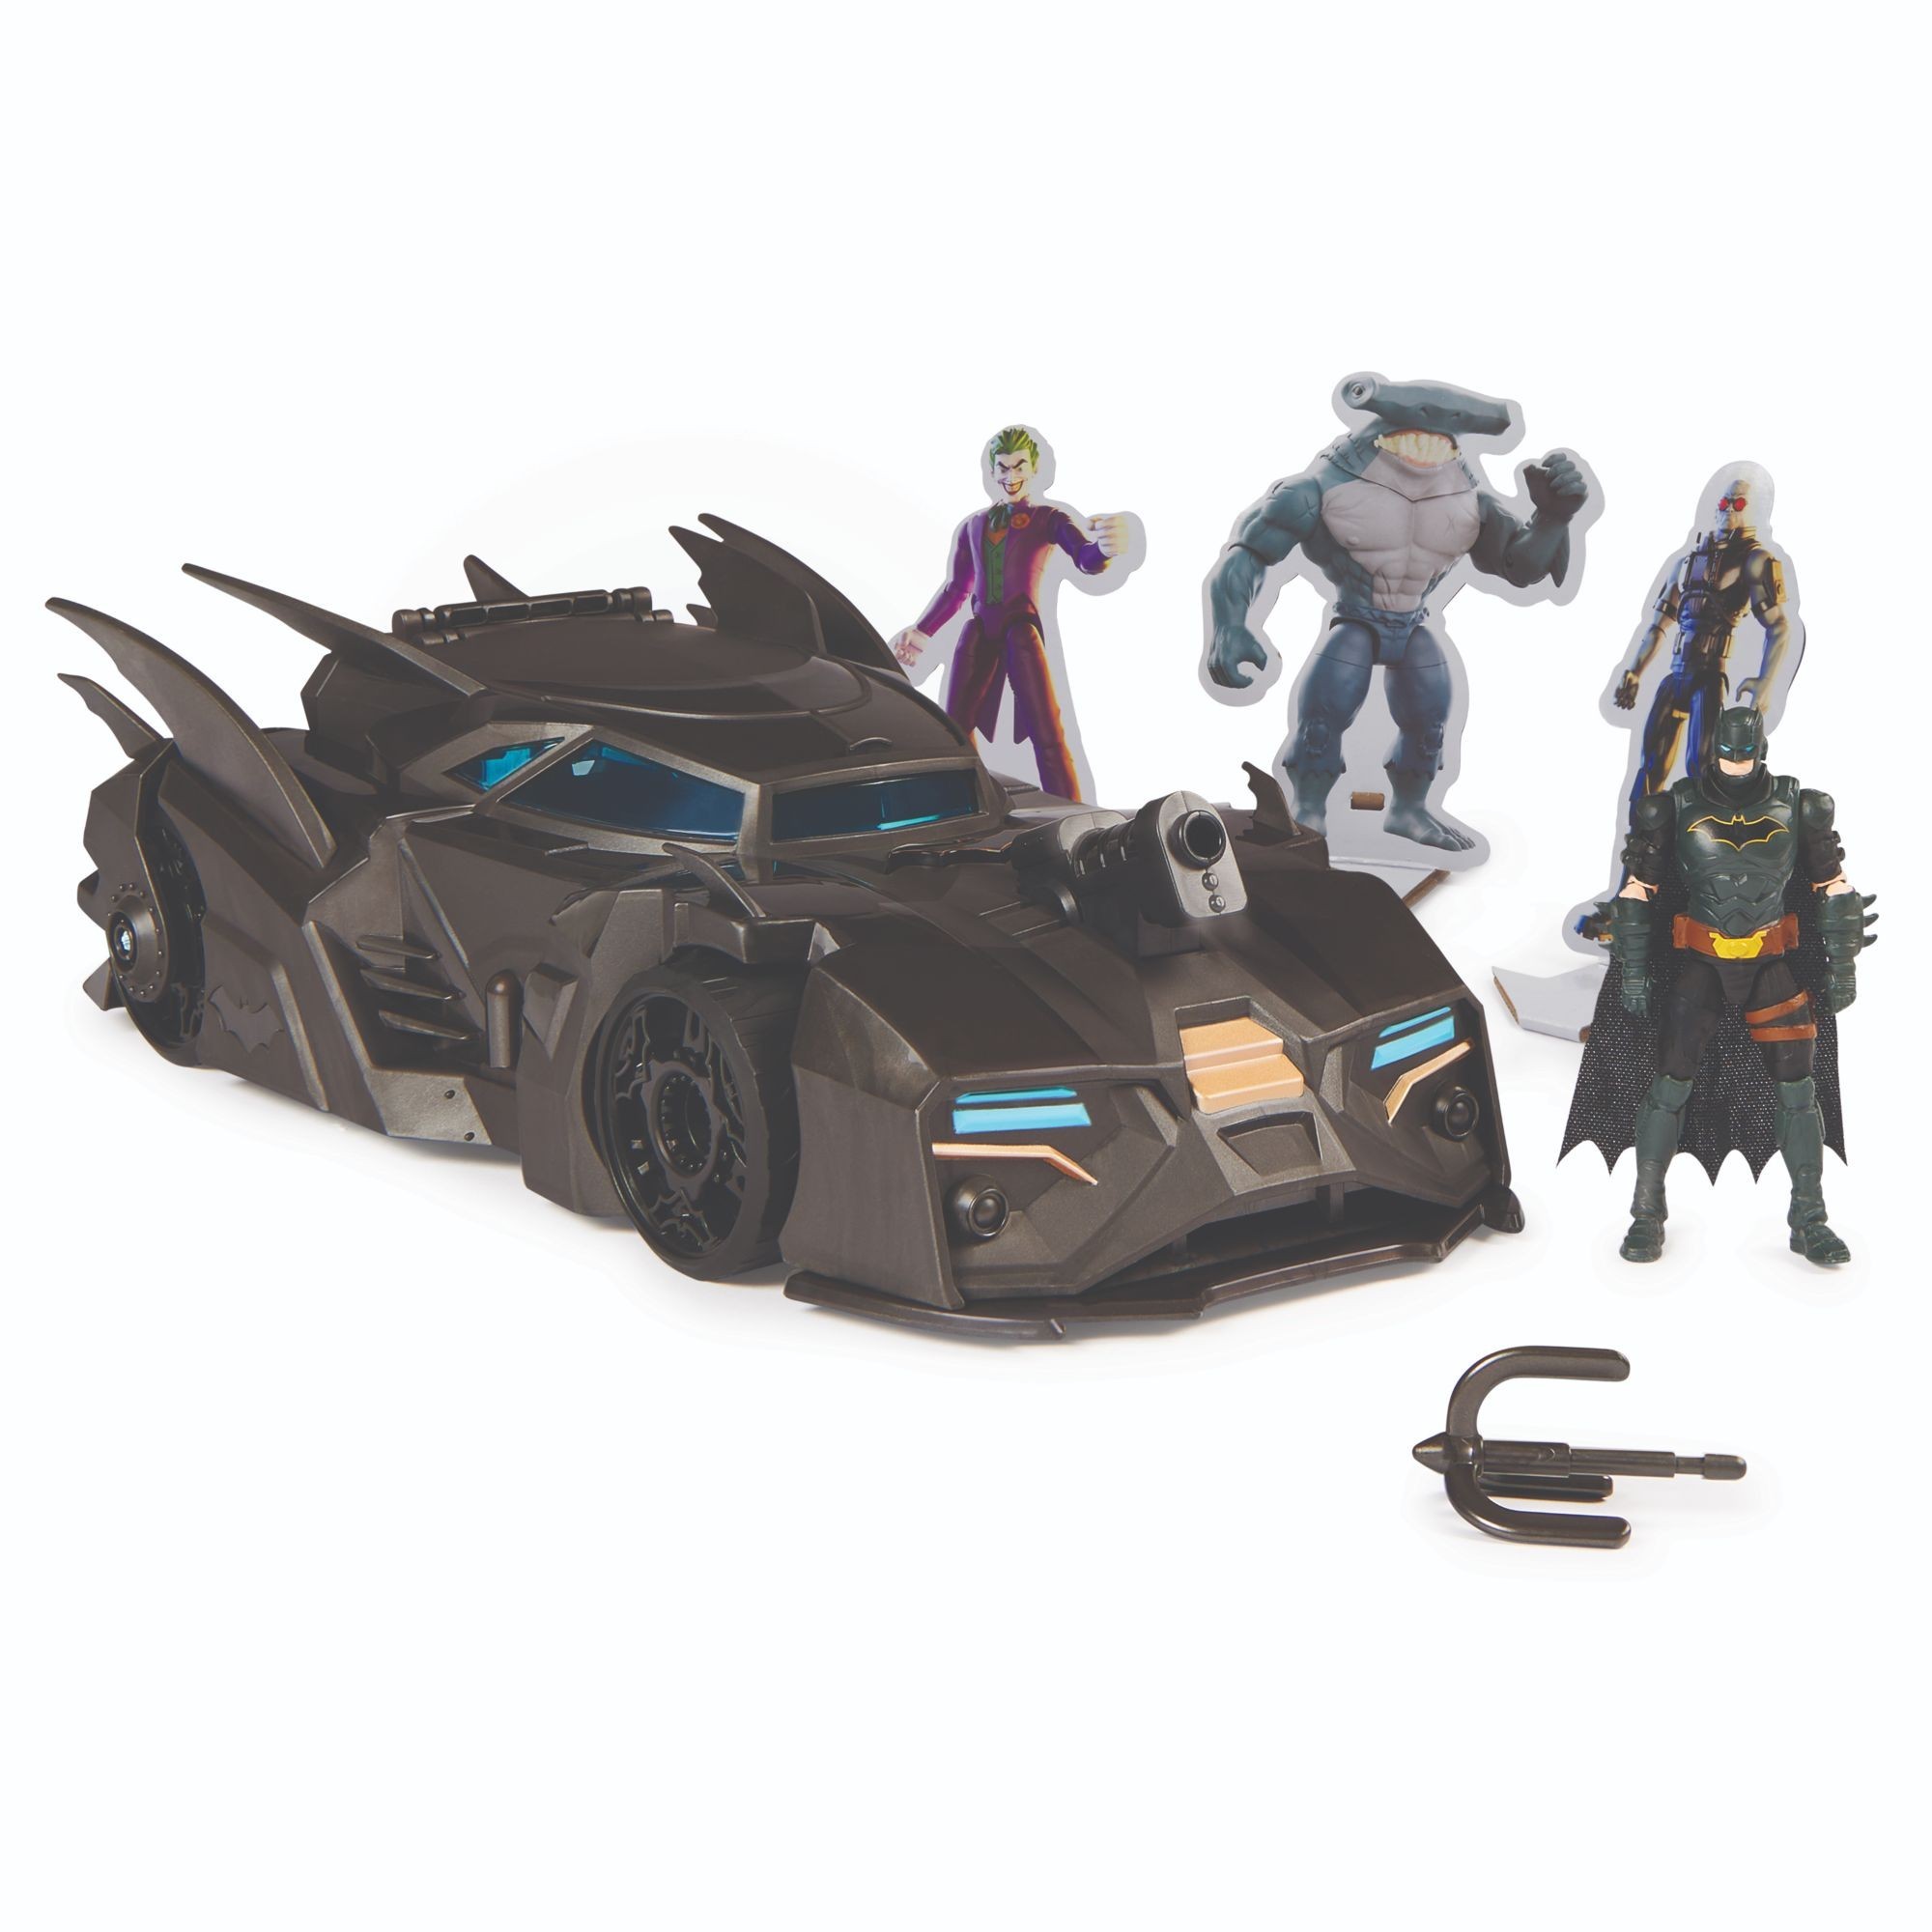 DC Comics Batmobile with 4 Batman